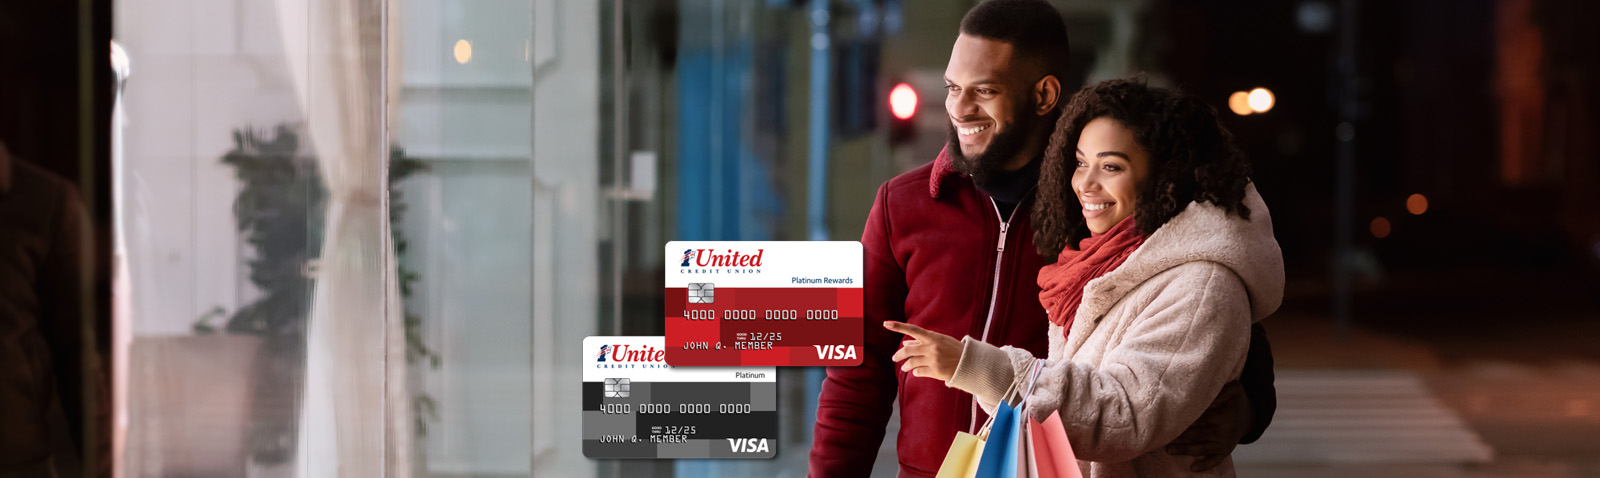 Couple shopping, Visa credit cards